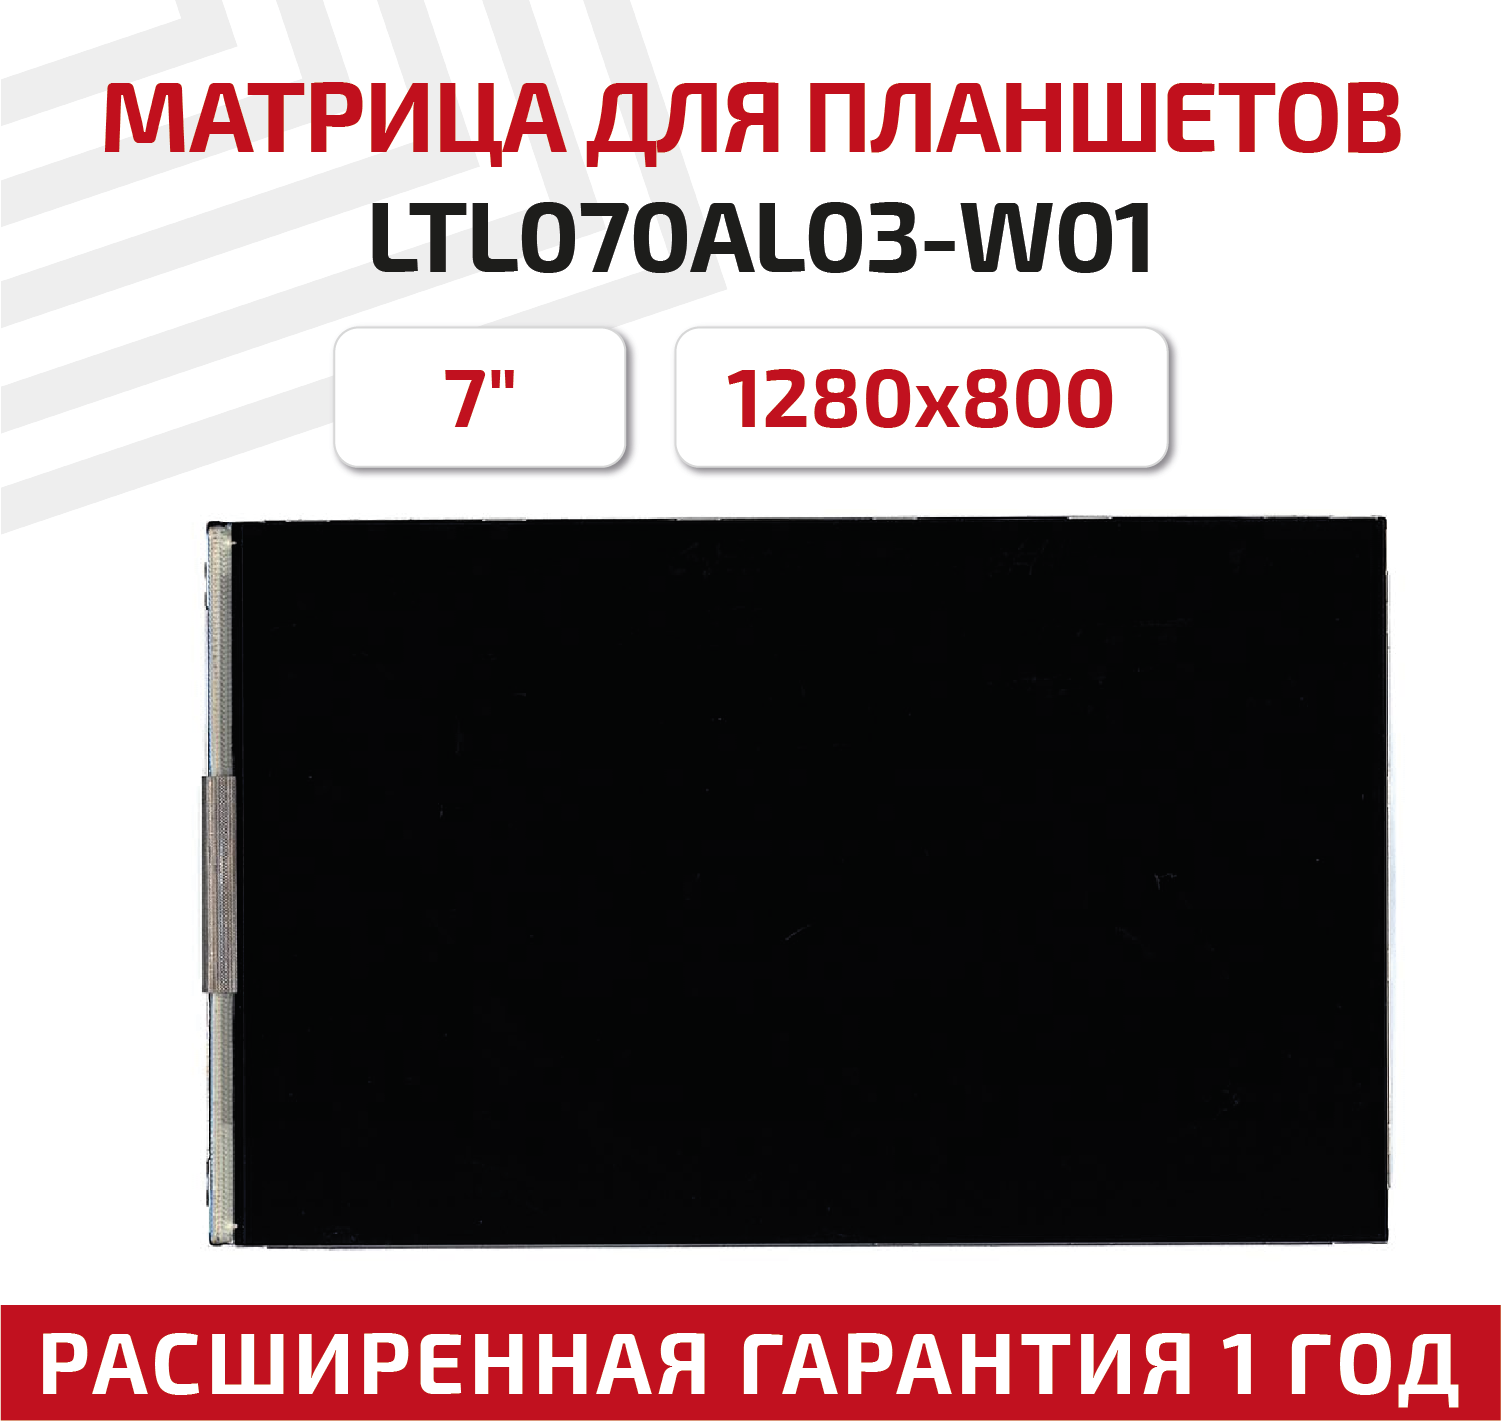 Матрица для планшета LTL070AL03-W01 7" 1280x800 30pin Normal (стандарт) светодиодная (LED) матовая